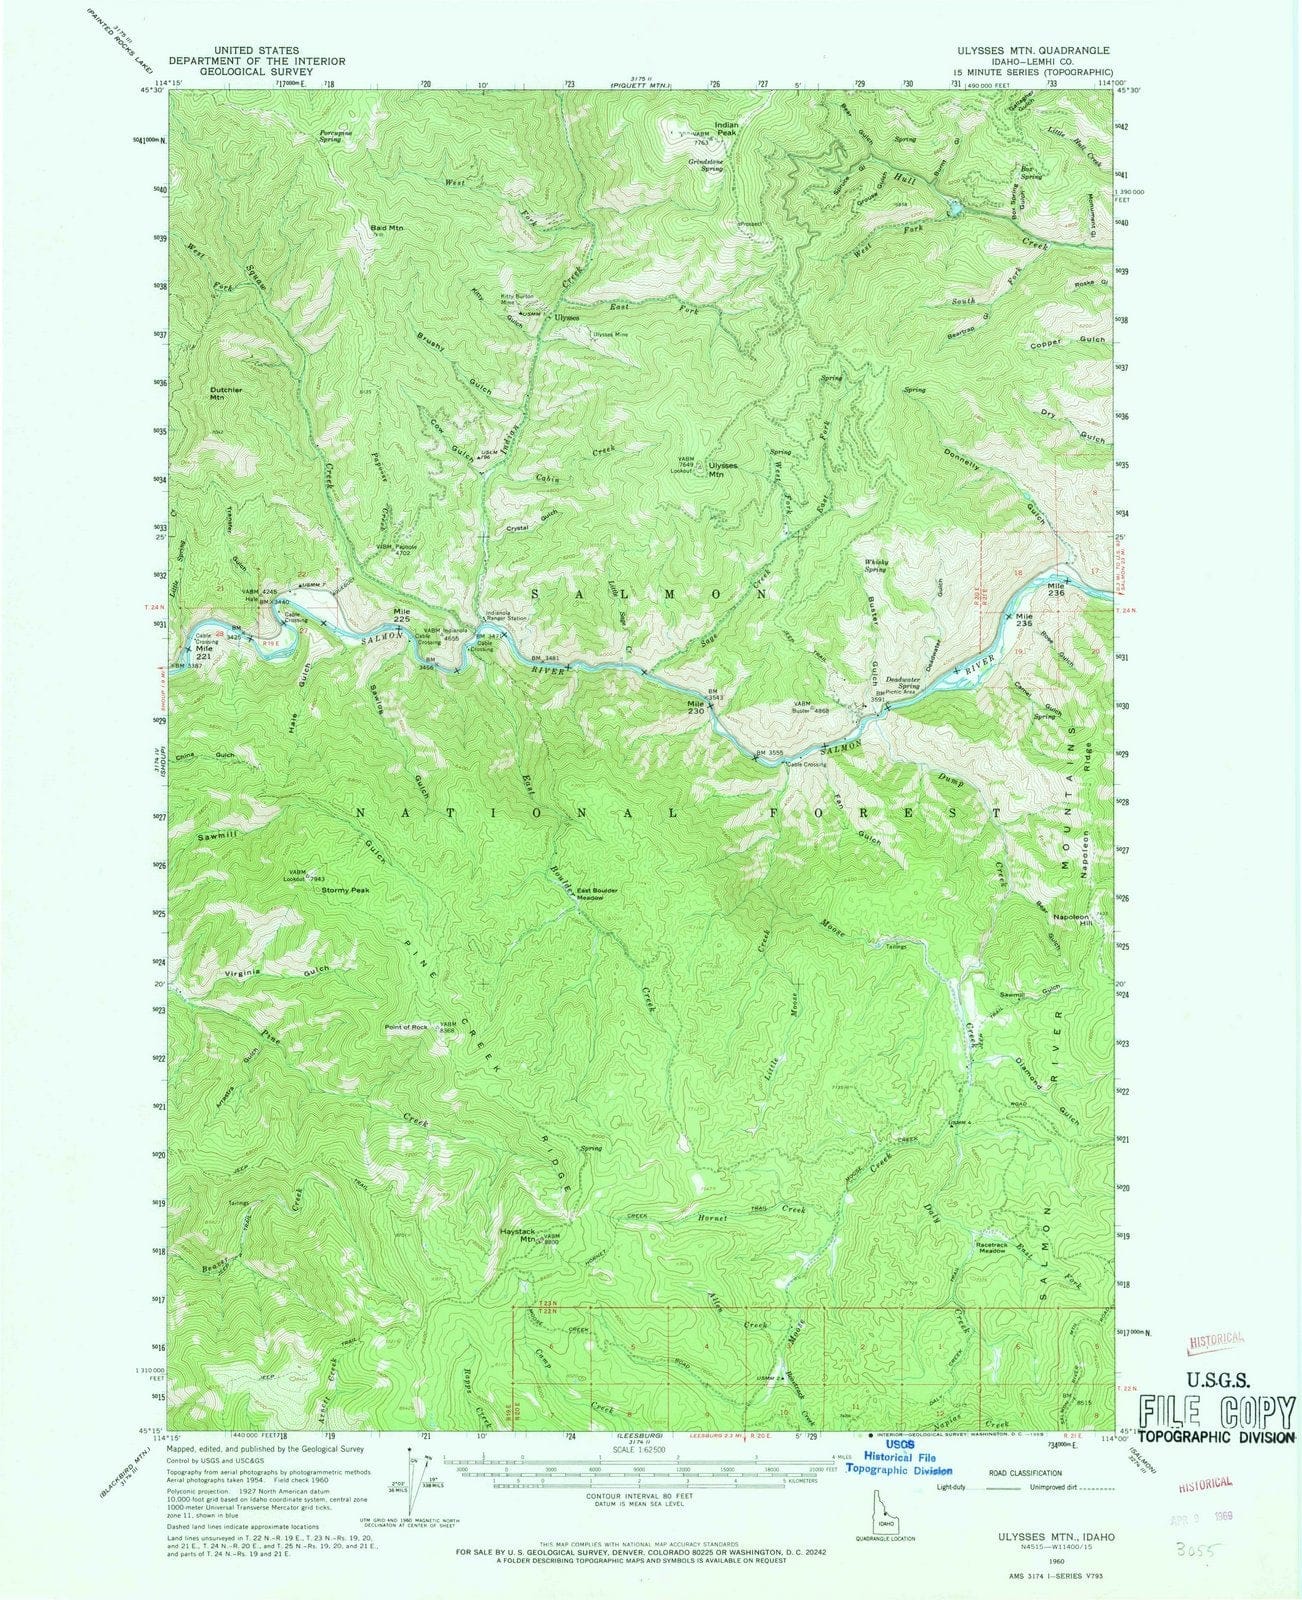 1960 Ulysses MTN, ID - Idaho - USGS Topographic Map